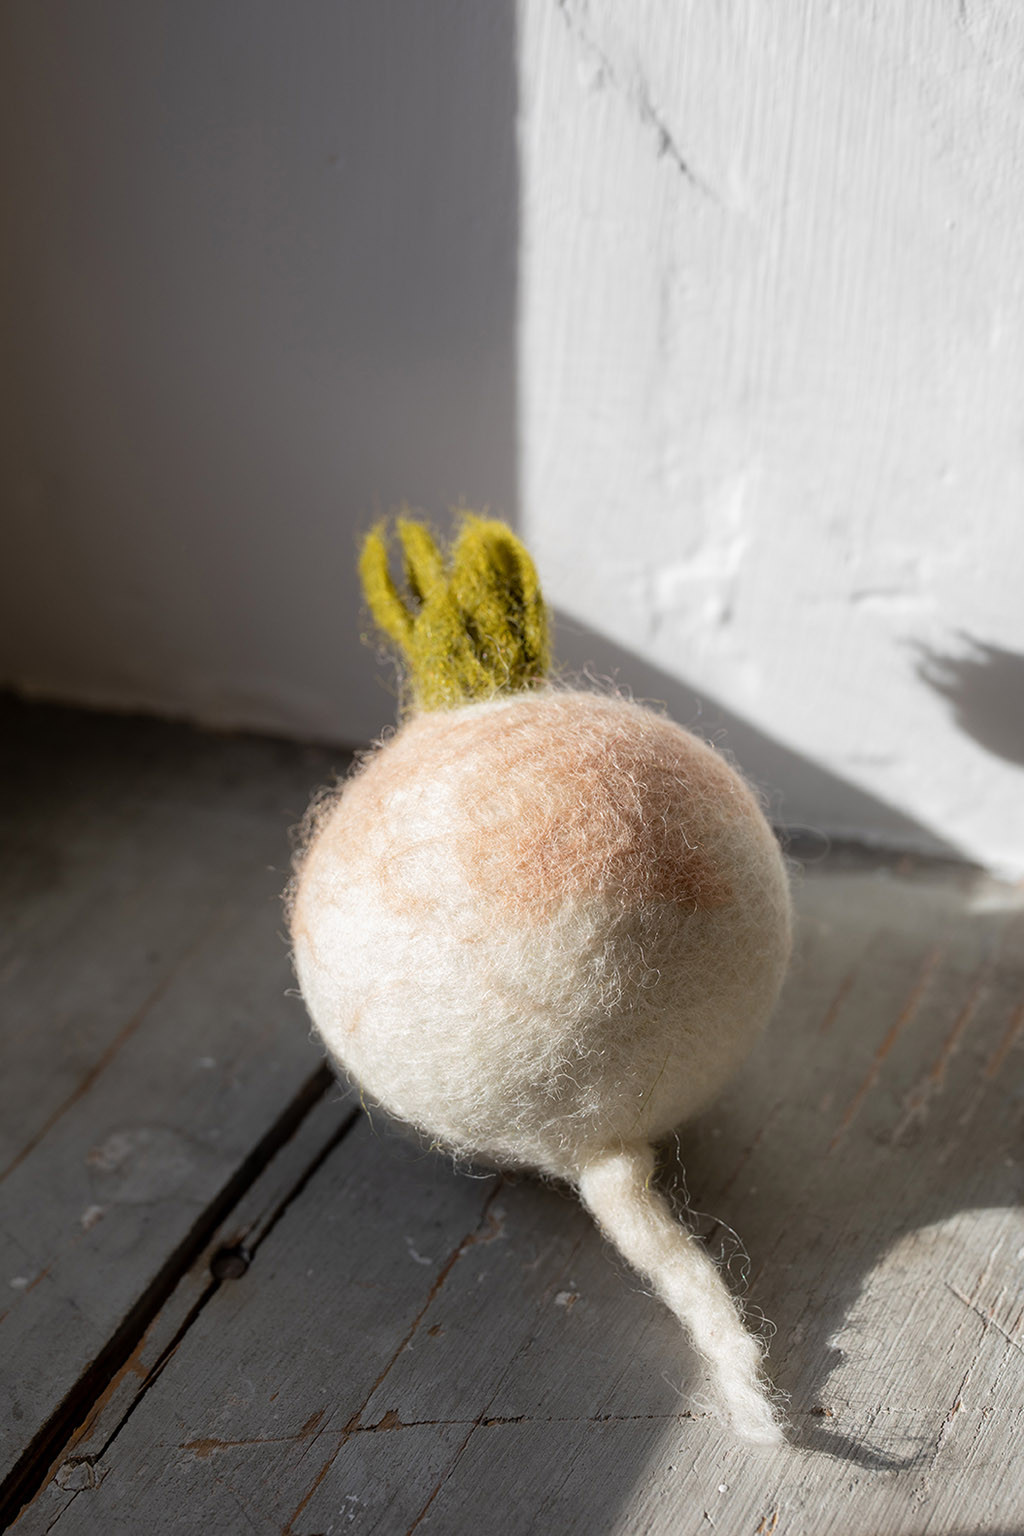 a turnip made of boiled wool